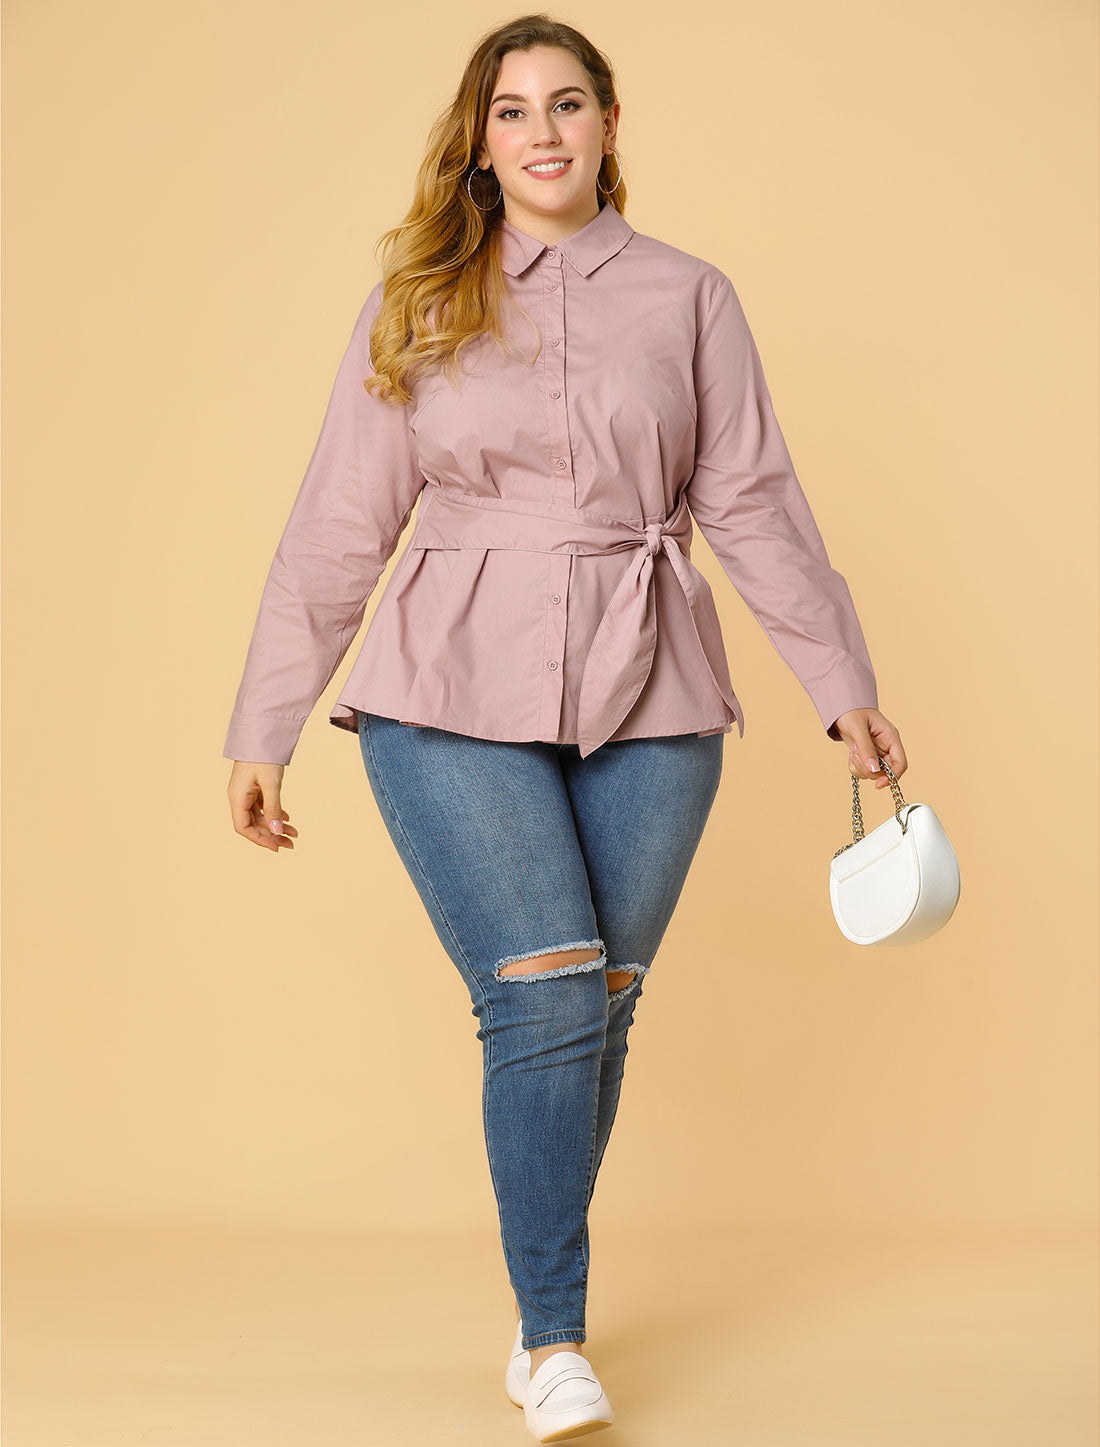 Bublédon Women's Plus Size Button Up Shirts Belted Safari Work Blouse